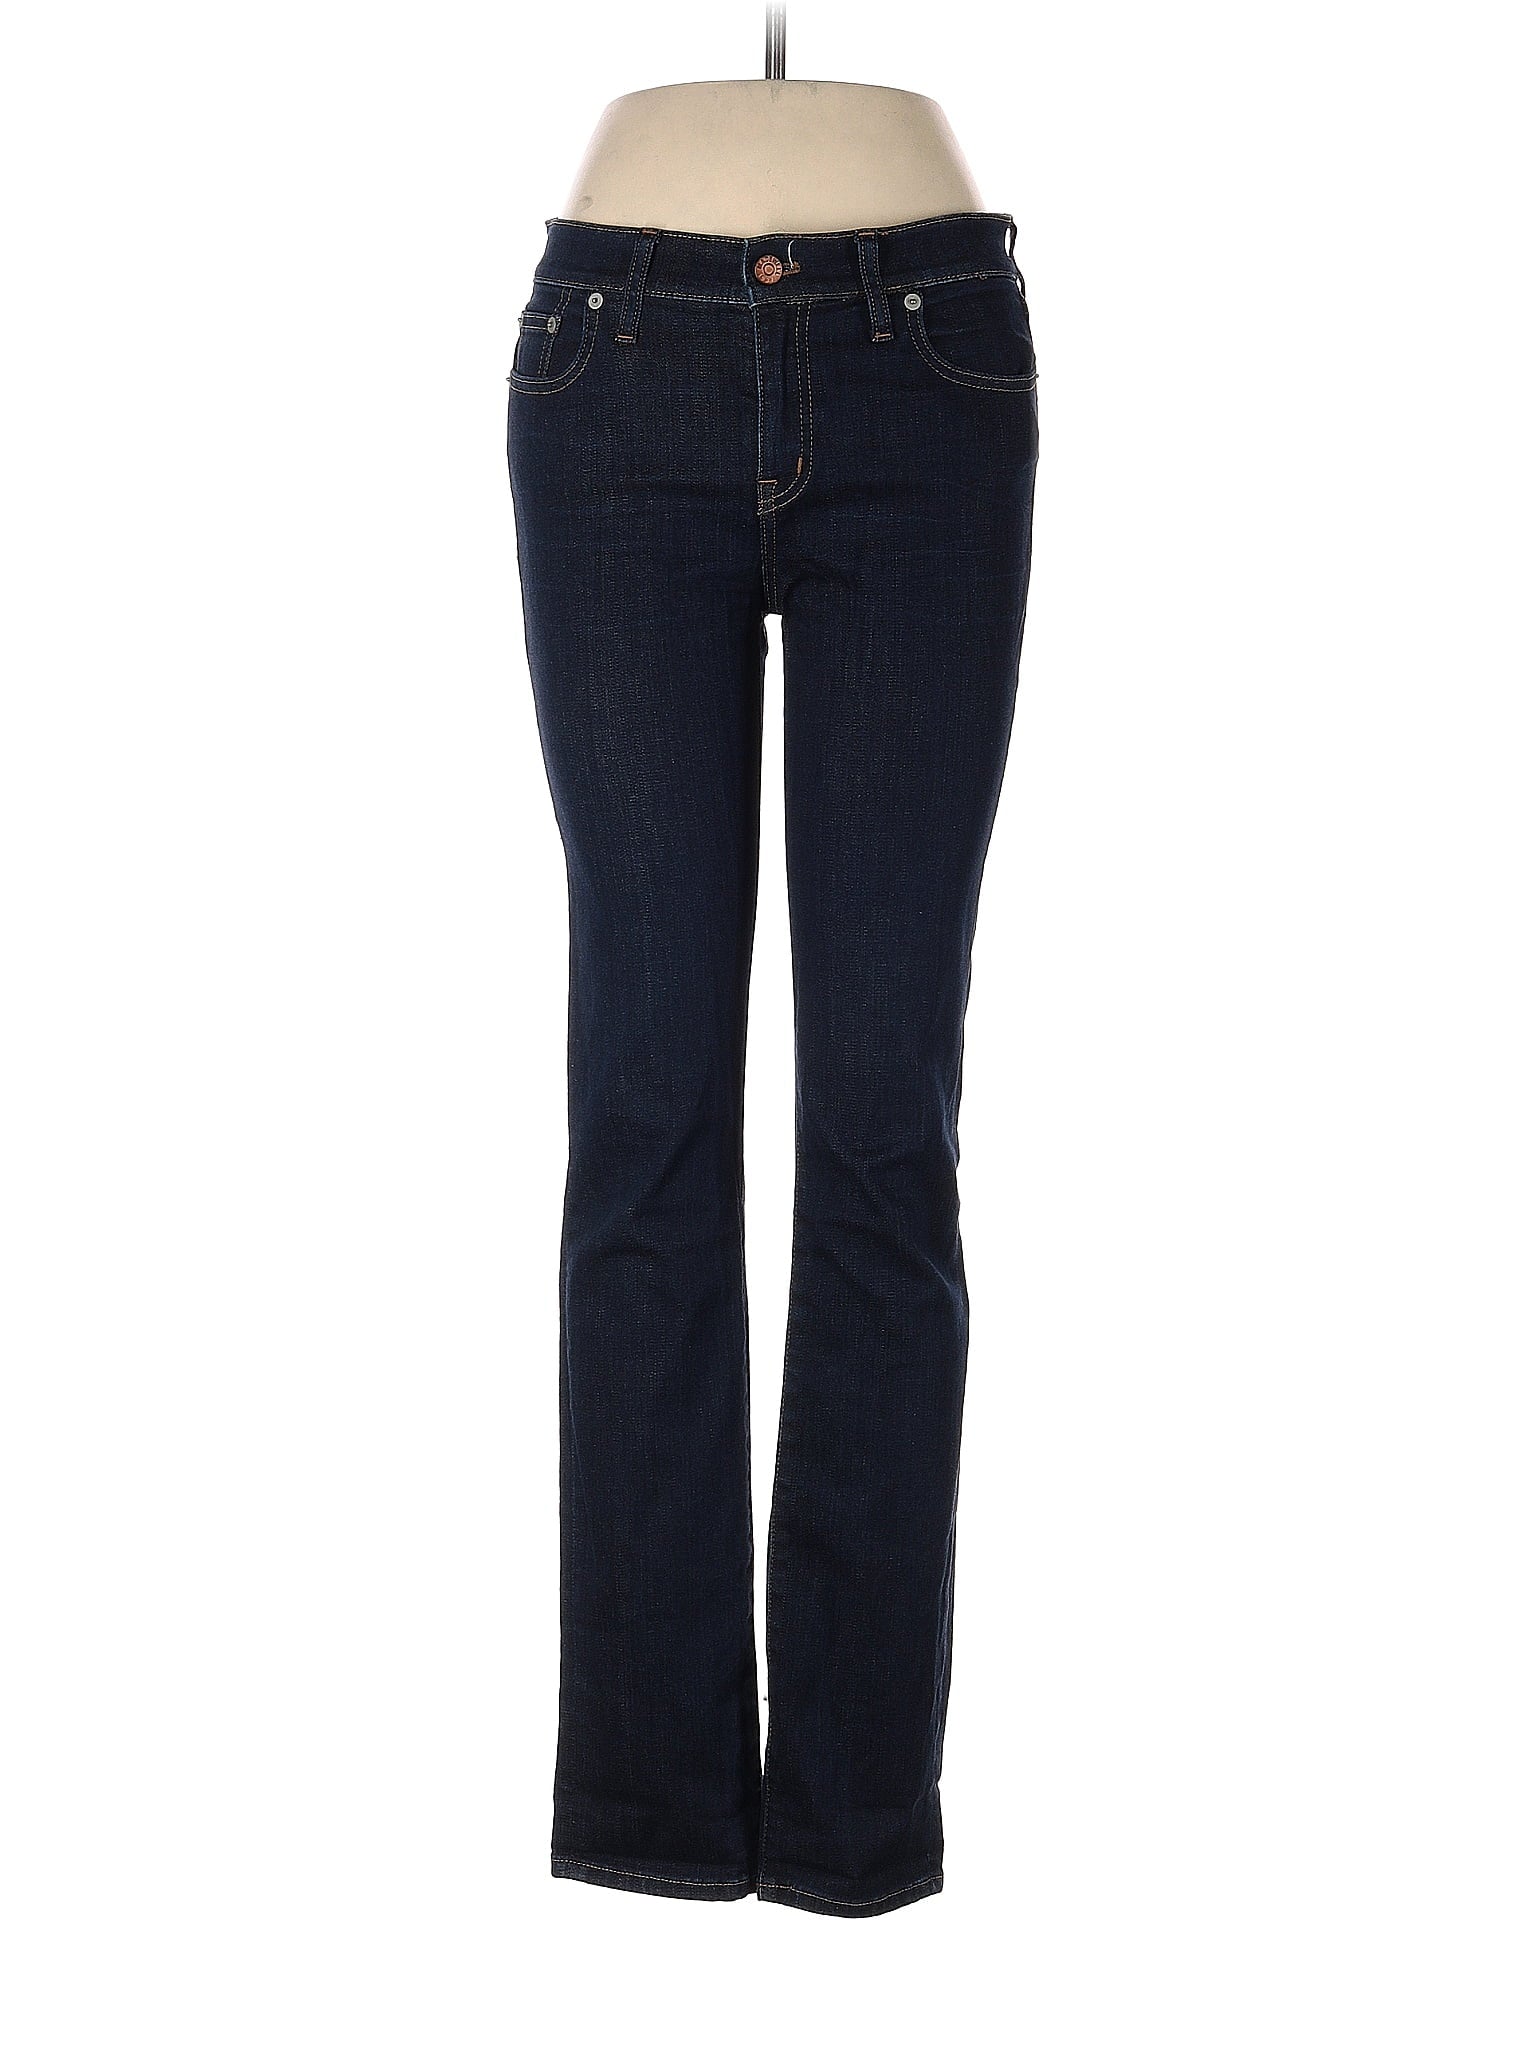 Mid-Rise Boyjeans Jeans in Dark Wash waist size - 28